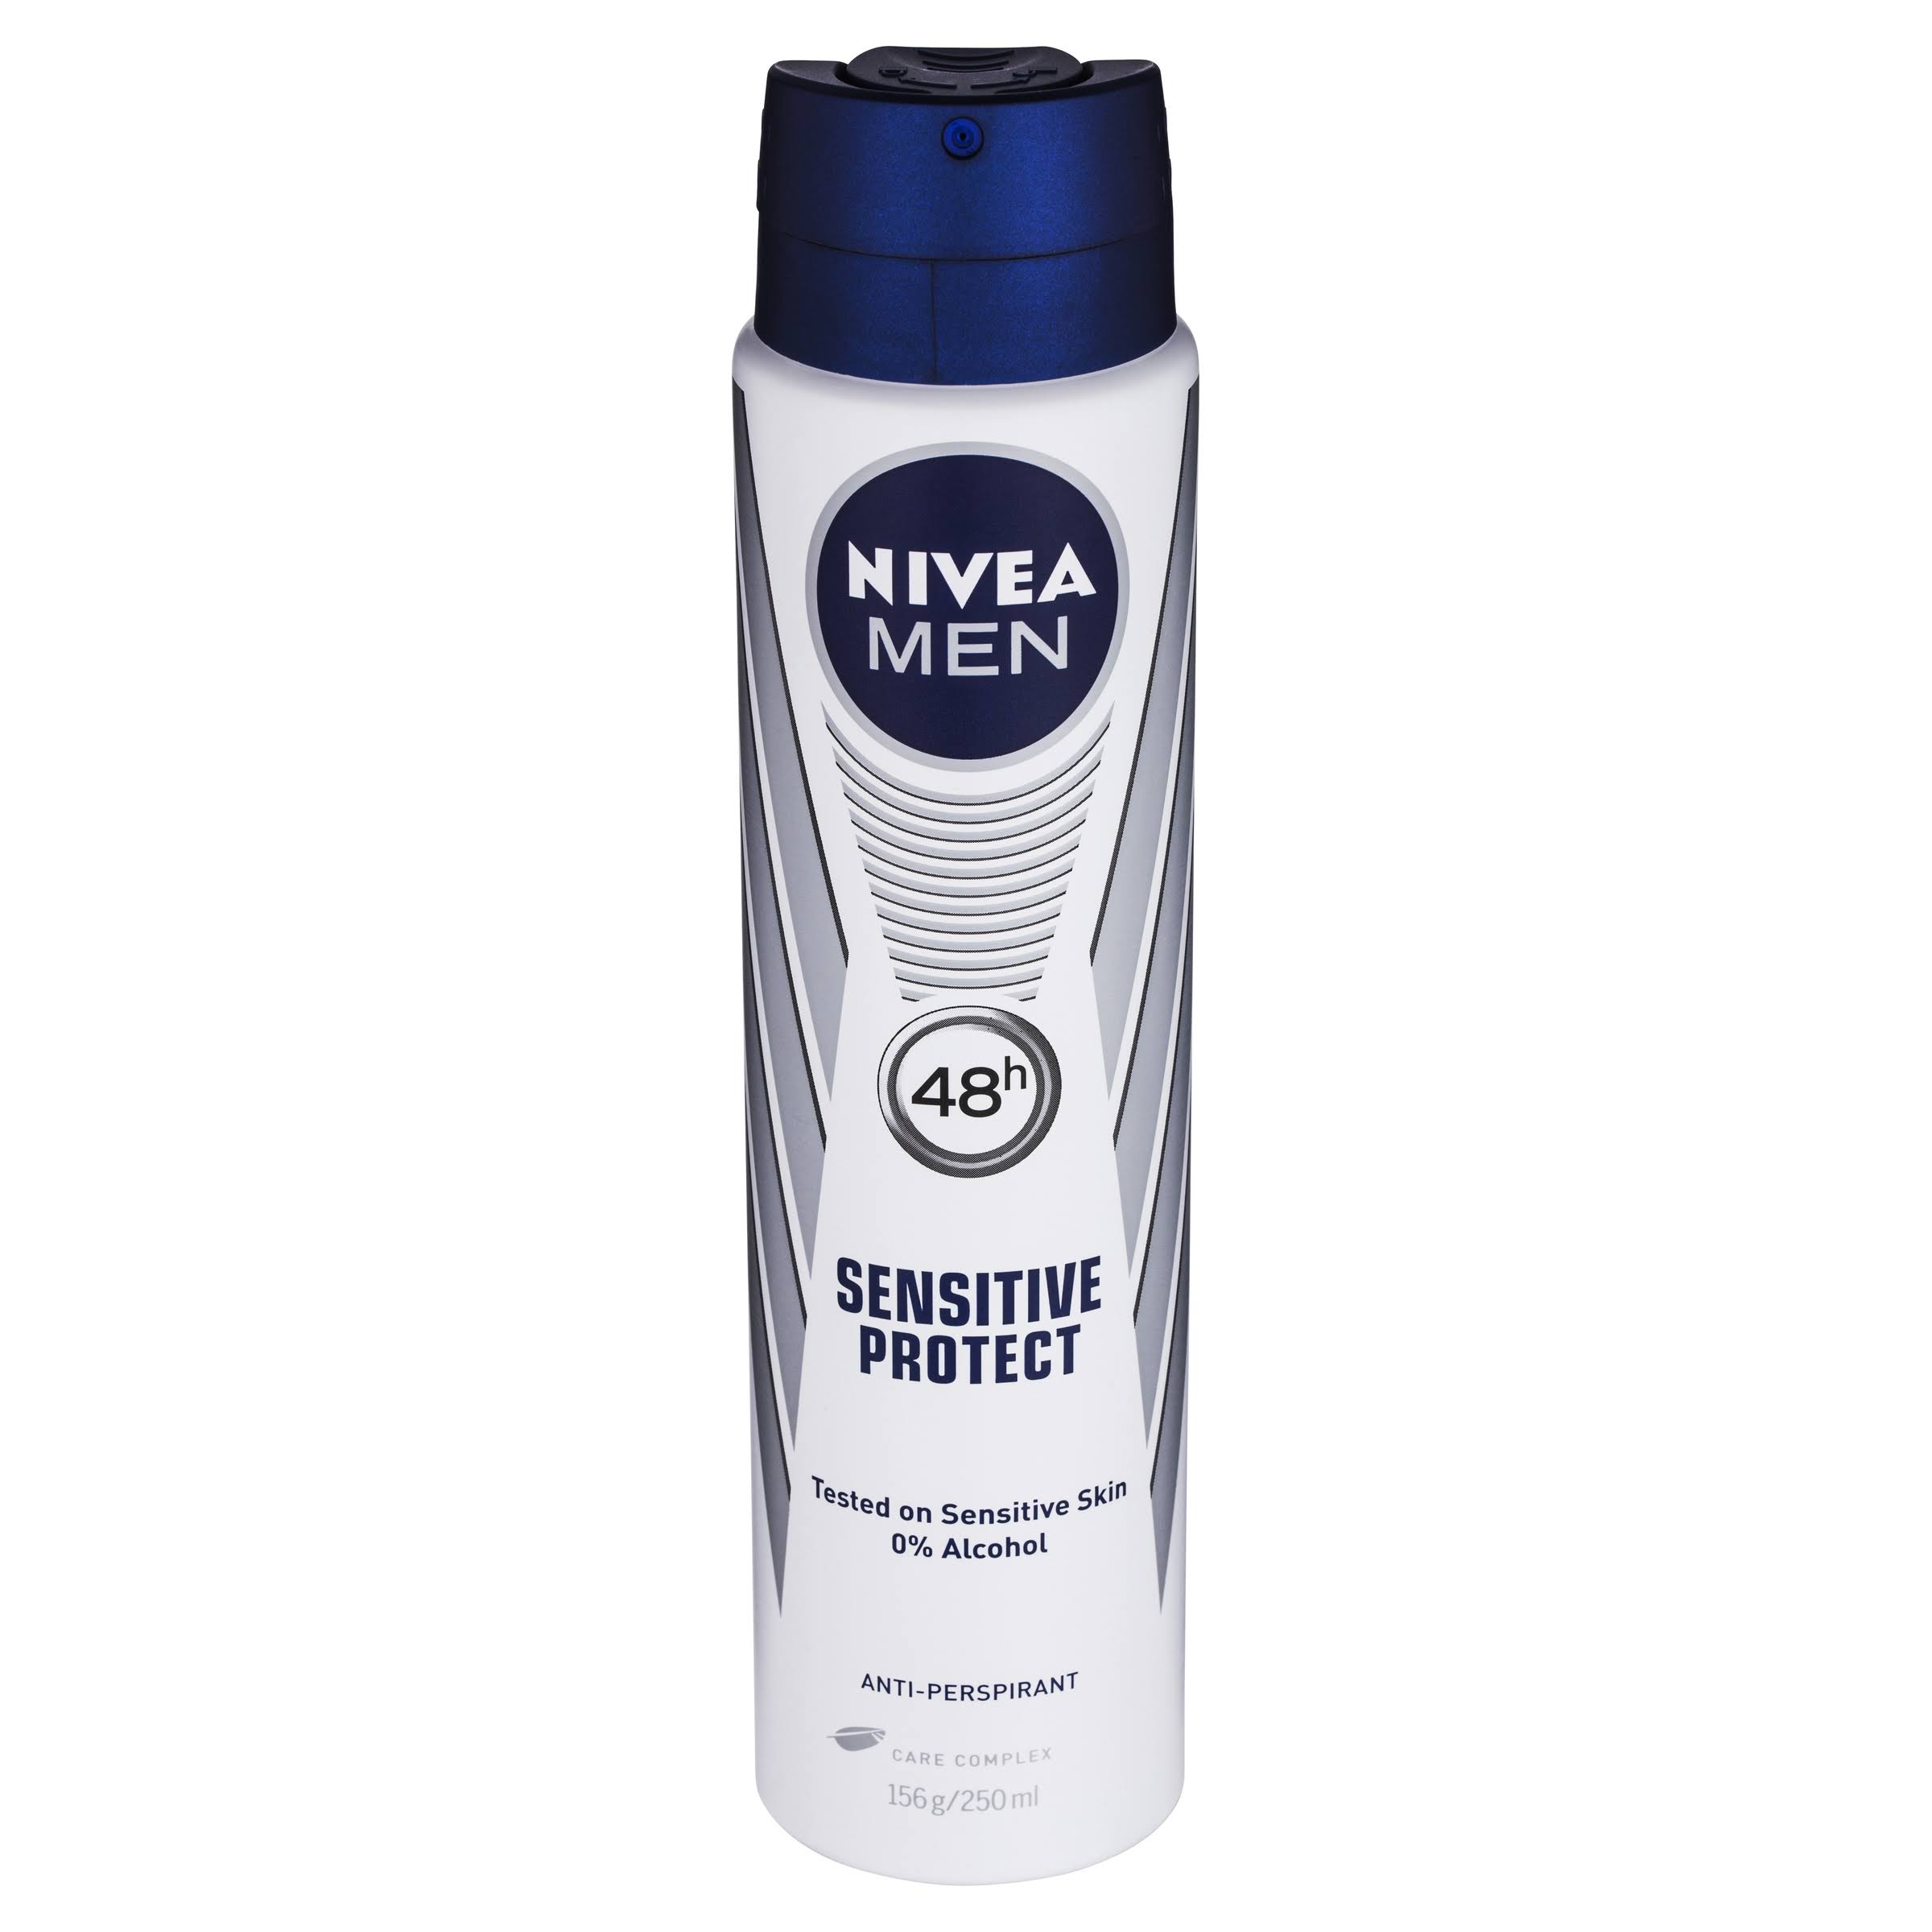 Nivea Men Sensitive Protect Anti-Perspirant - 250ml